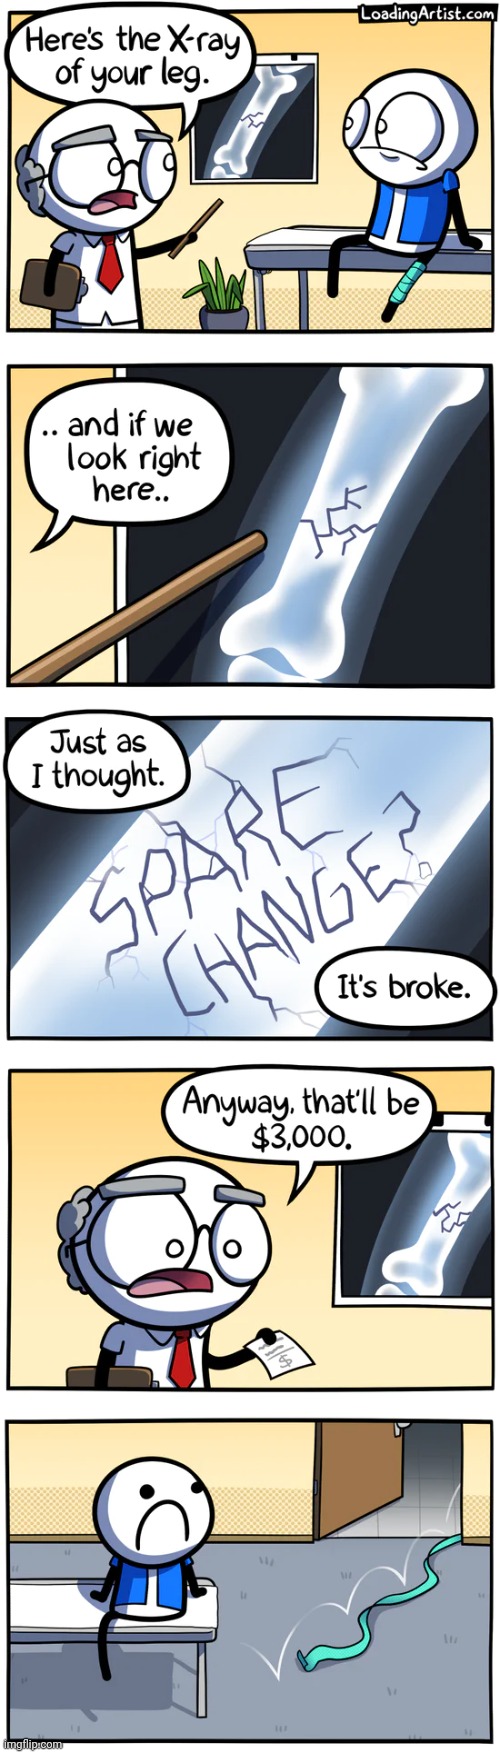 "Spare change?" | image tagged in loading artist,comics,comics/cartoons,x-ray,bone,leg | made w/ Imgflip meme maker